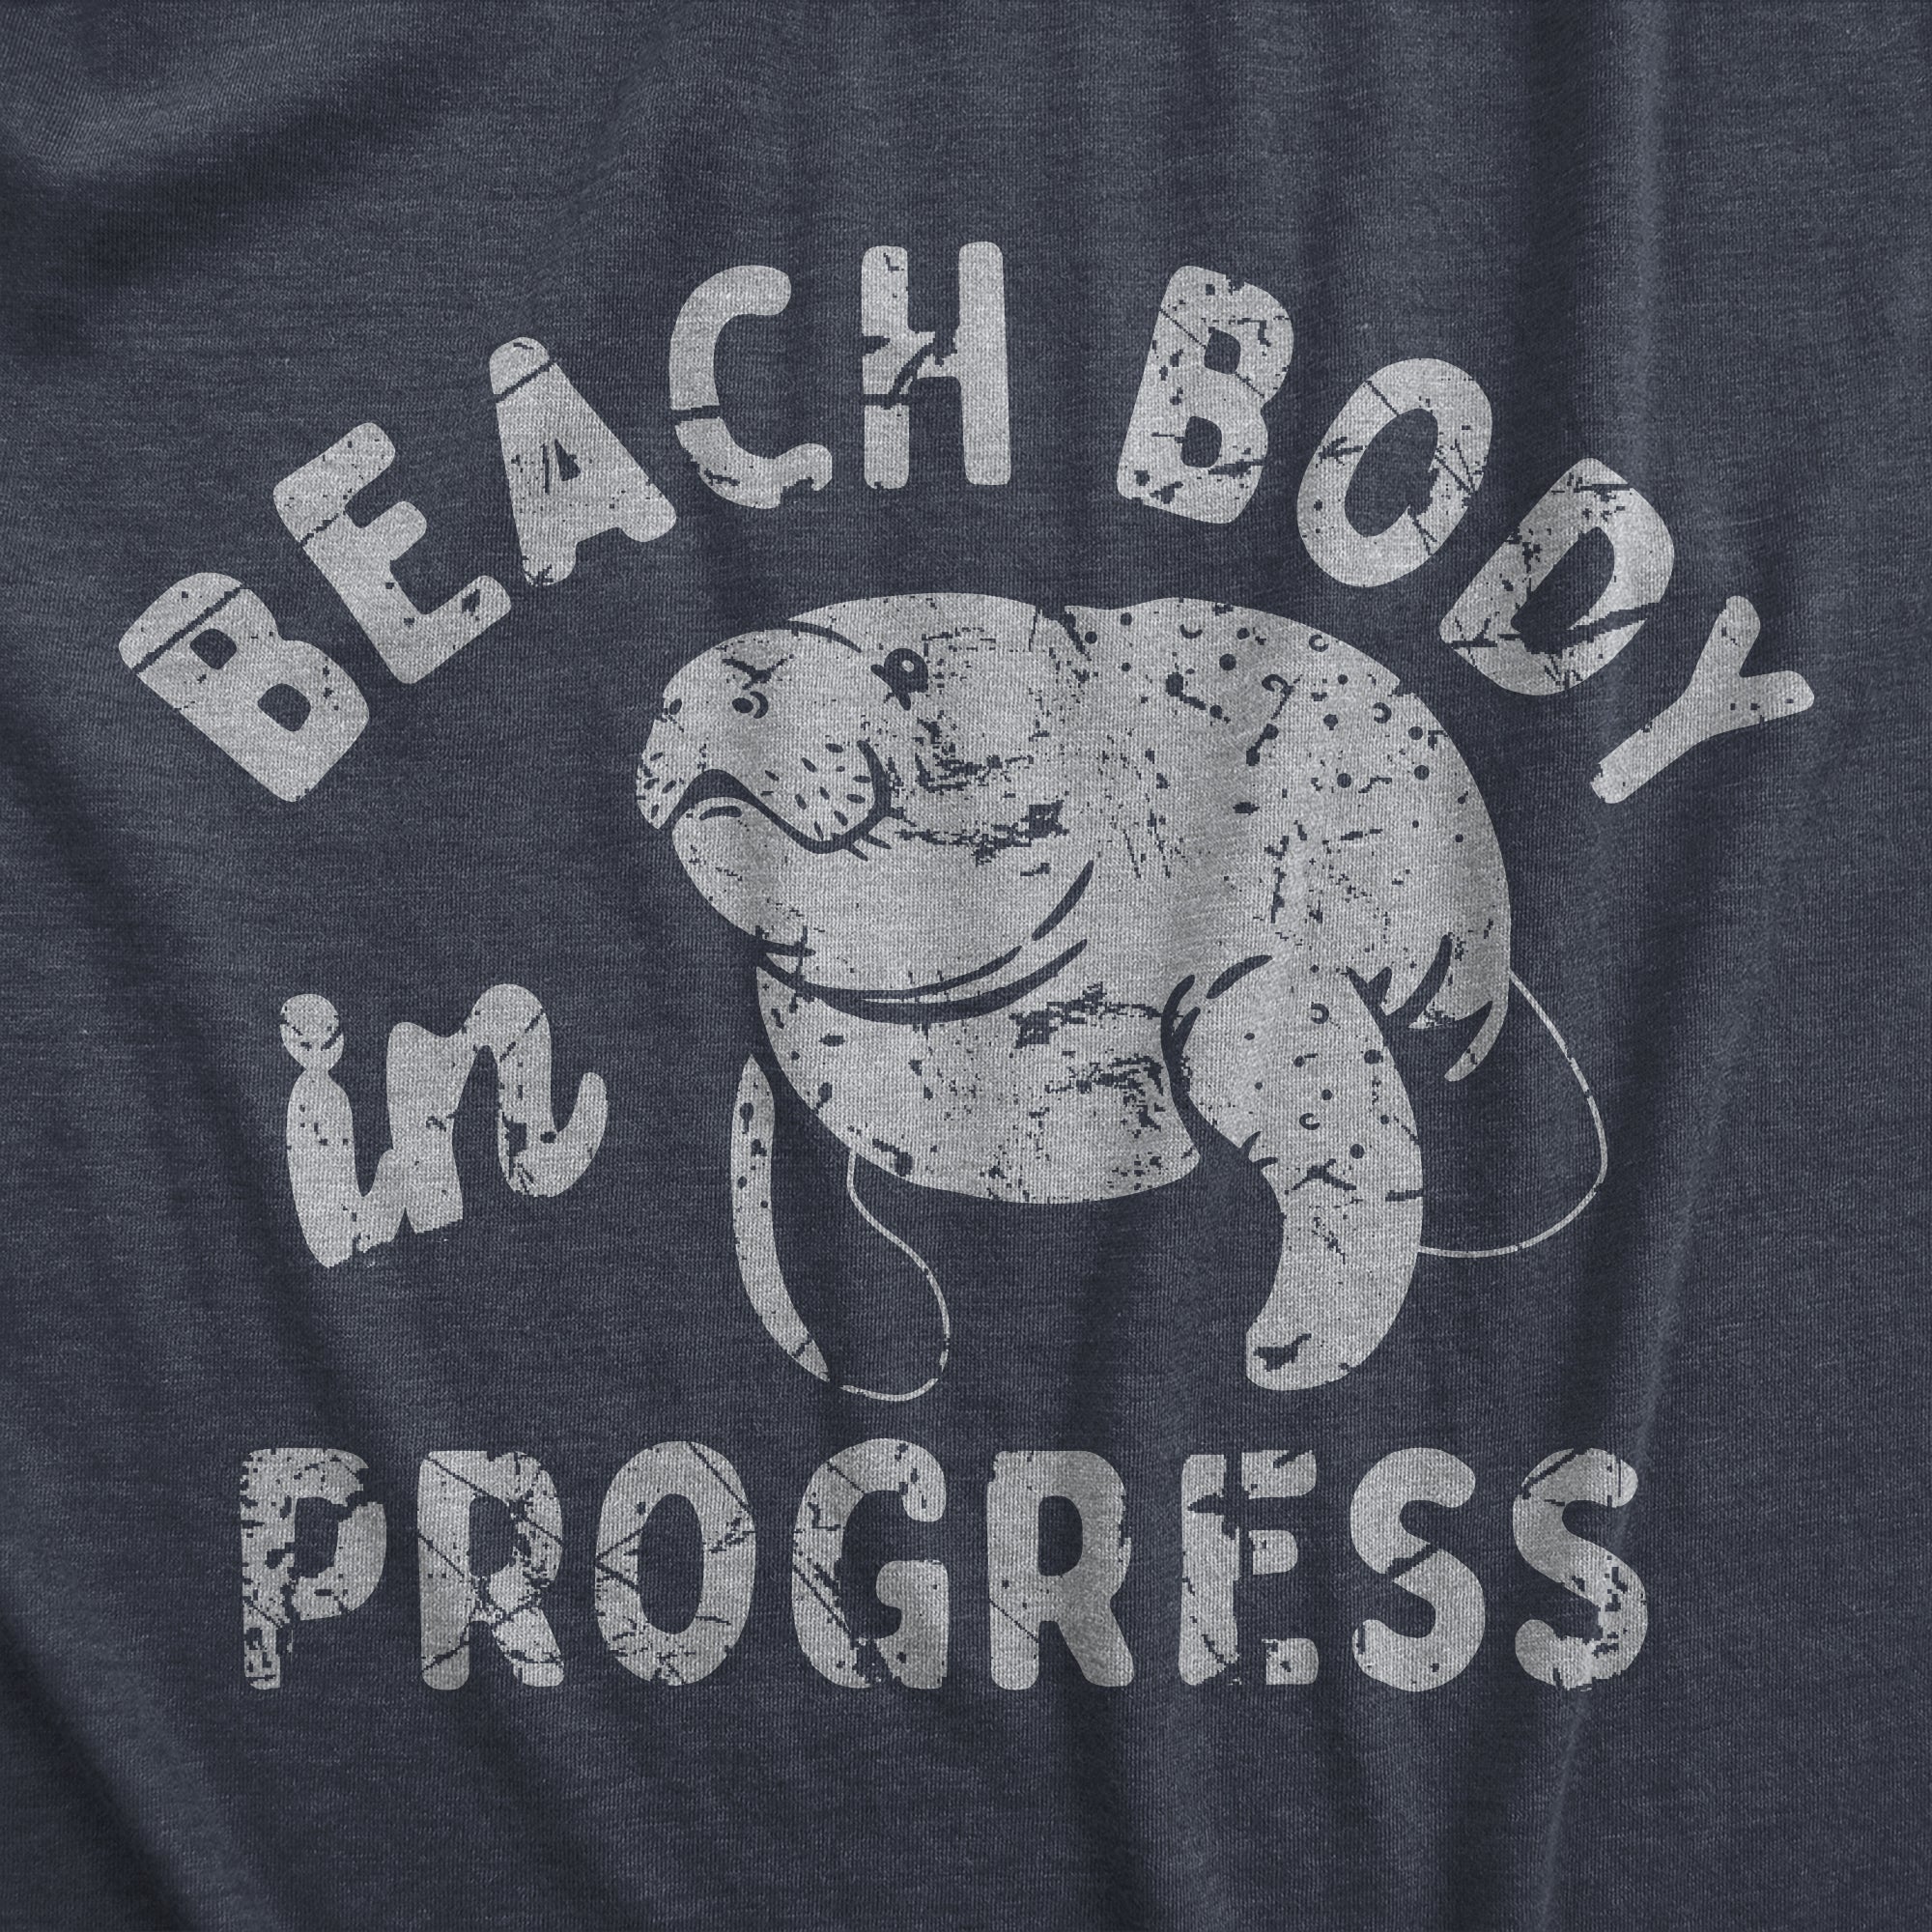 Funny Heather Navy - BEACH Beach Body In Progress Mens T Shirt Nerdy Fitness sarcastic Tee